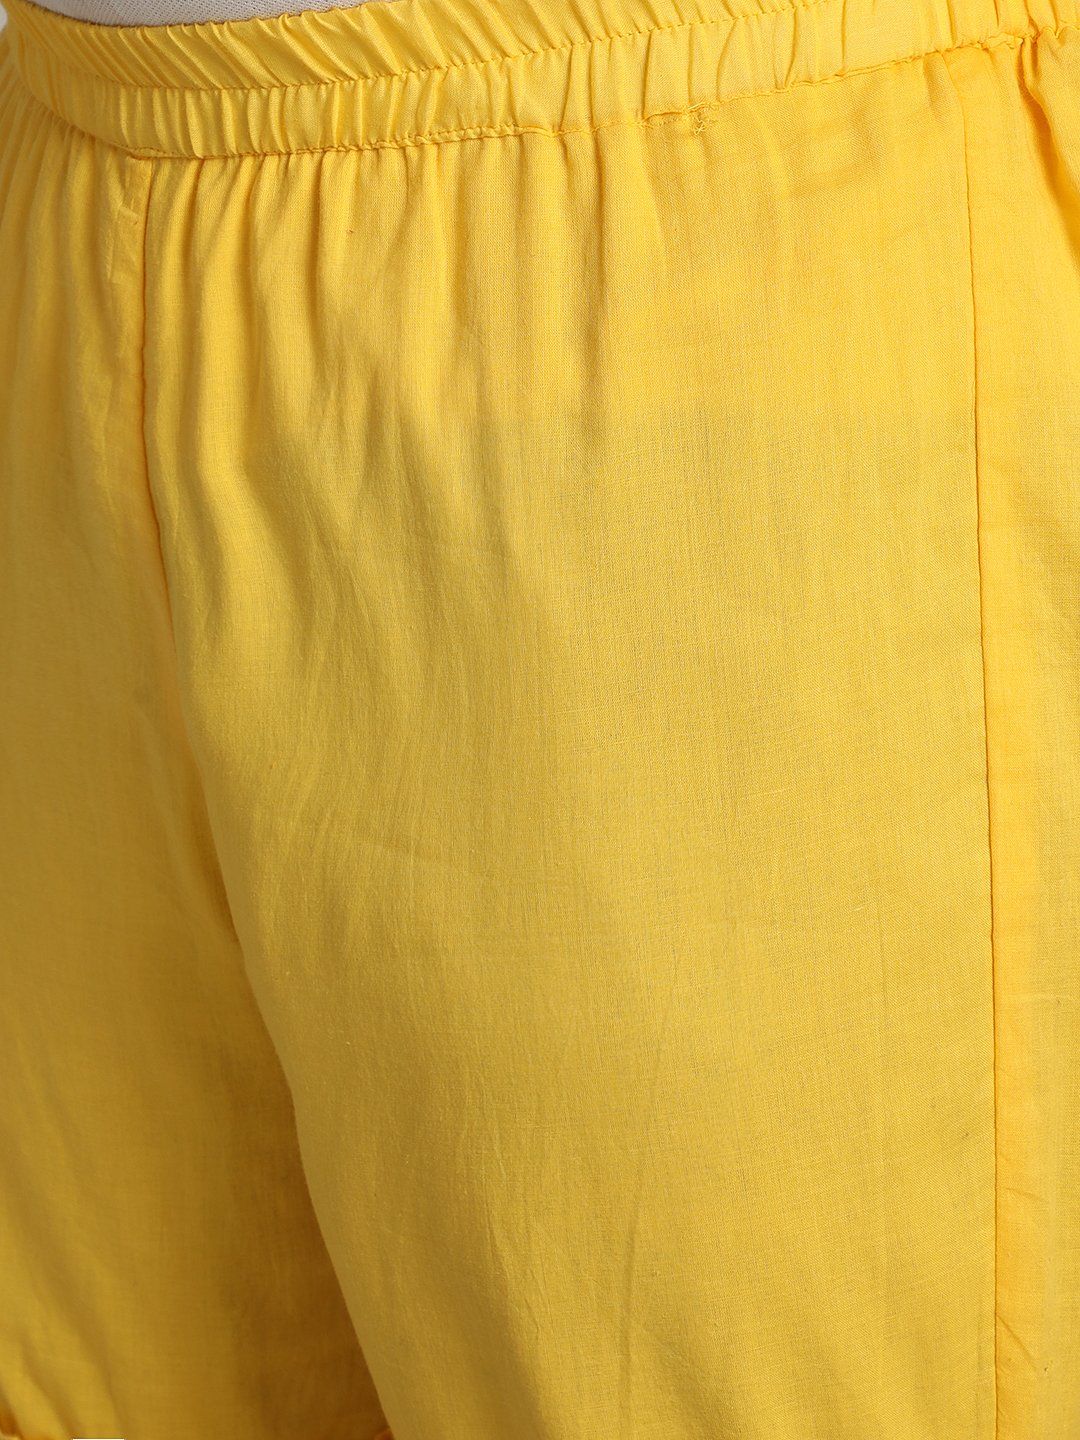 Ishin Women's Yellow Yoke Embroidered Kurta With Sharara & Dupatta